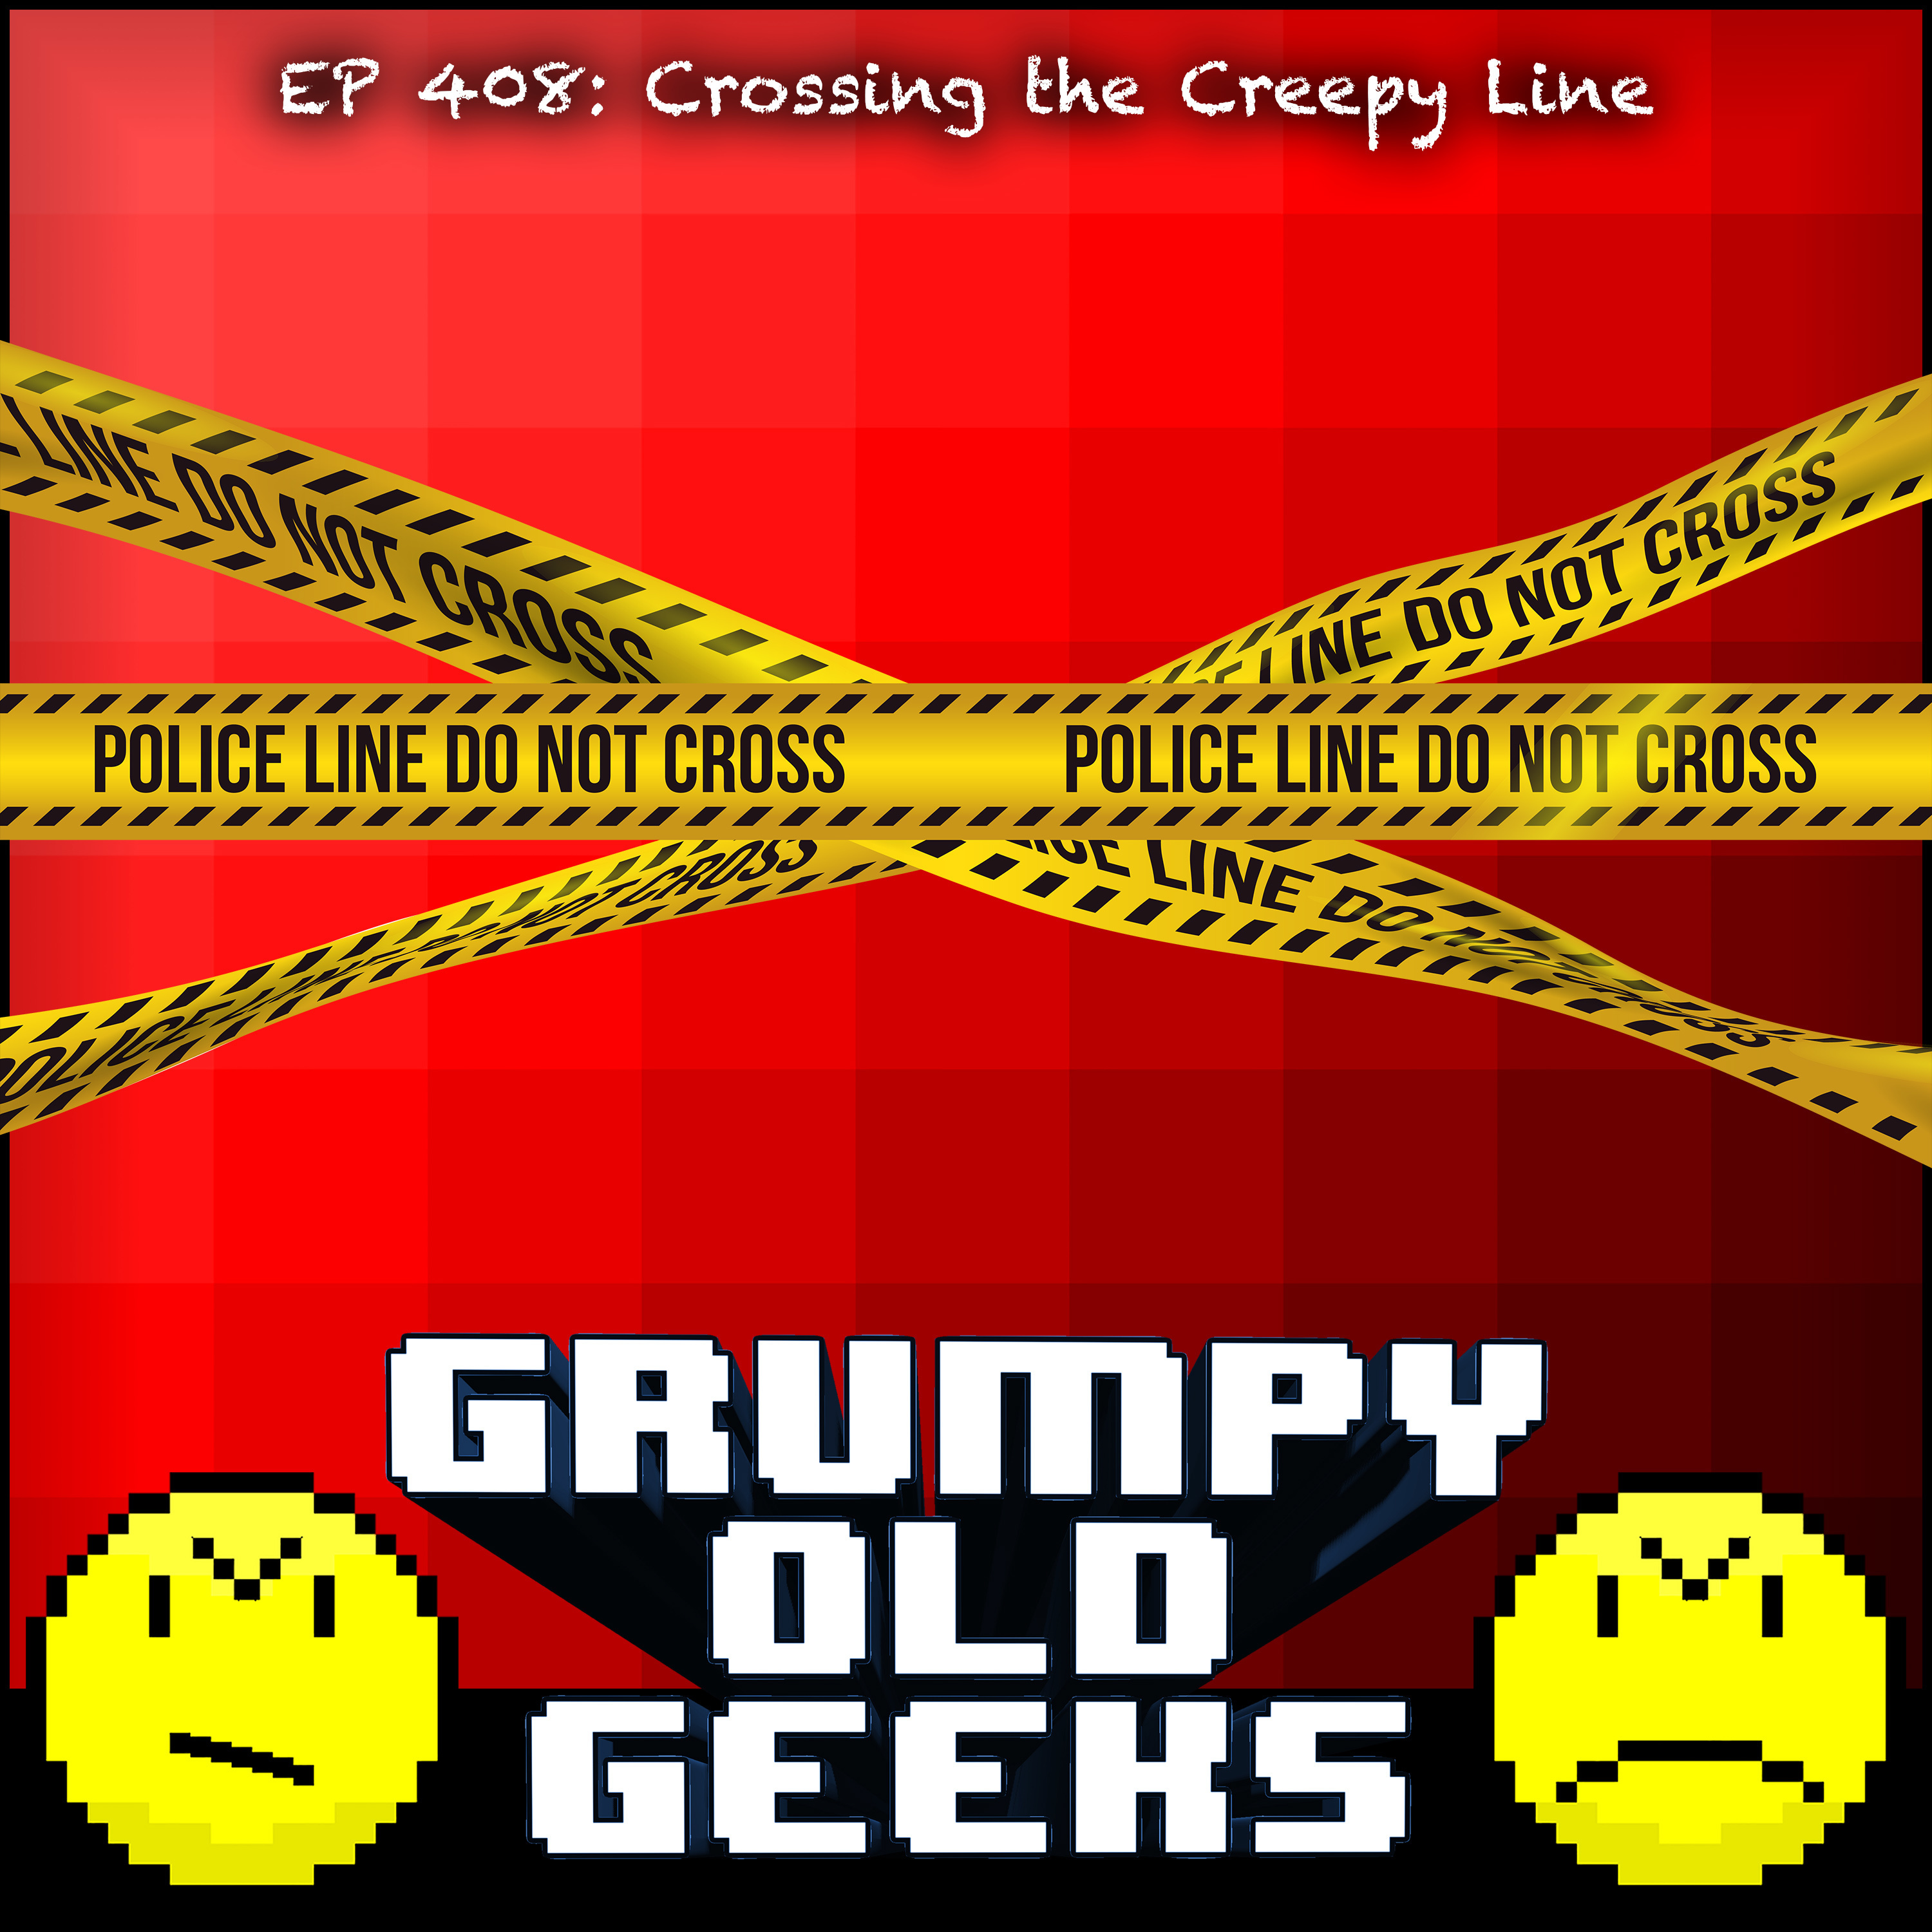 408: Crossing the Creepy Line Image